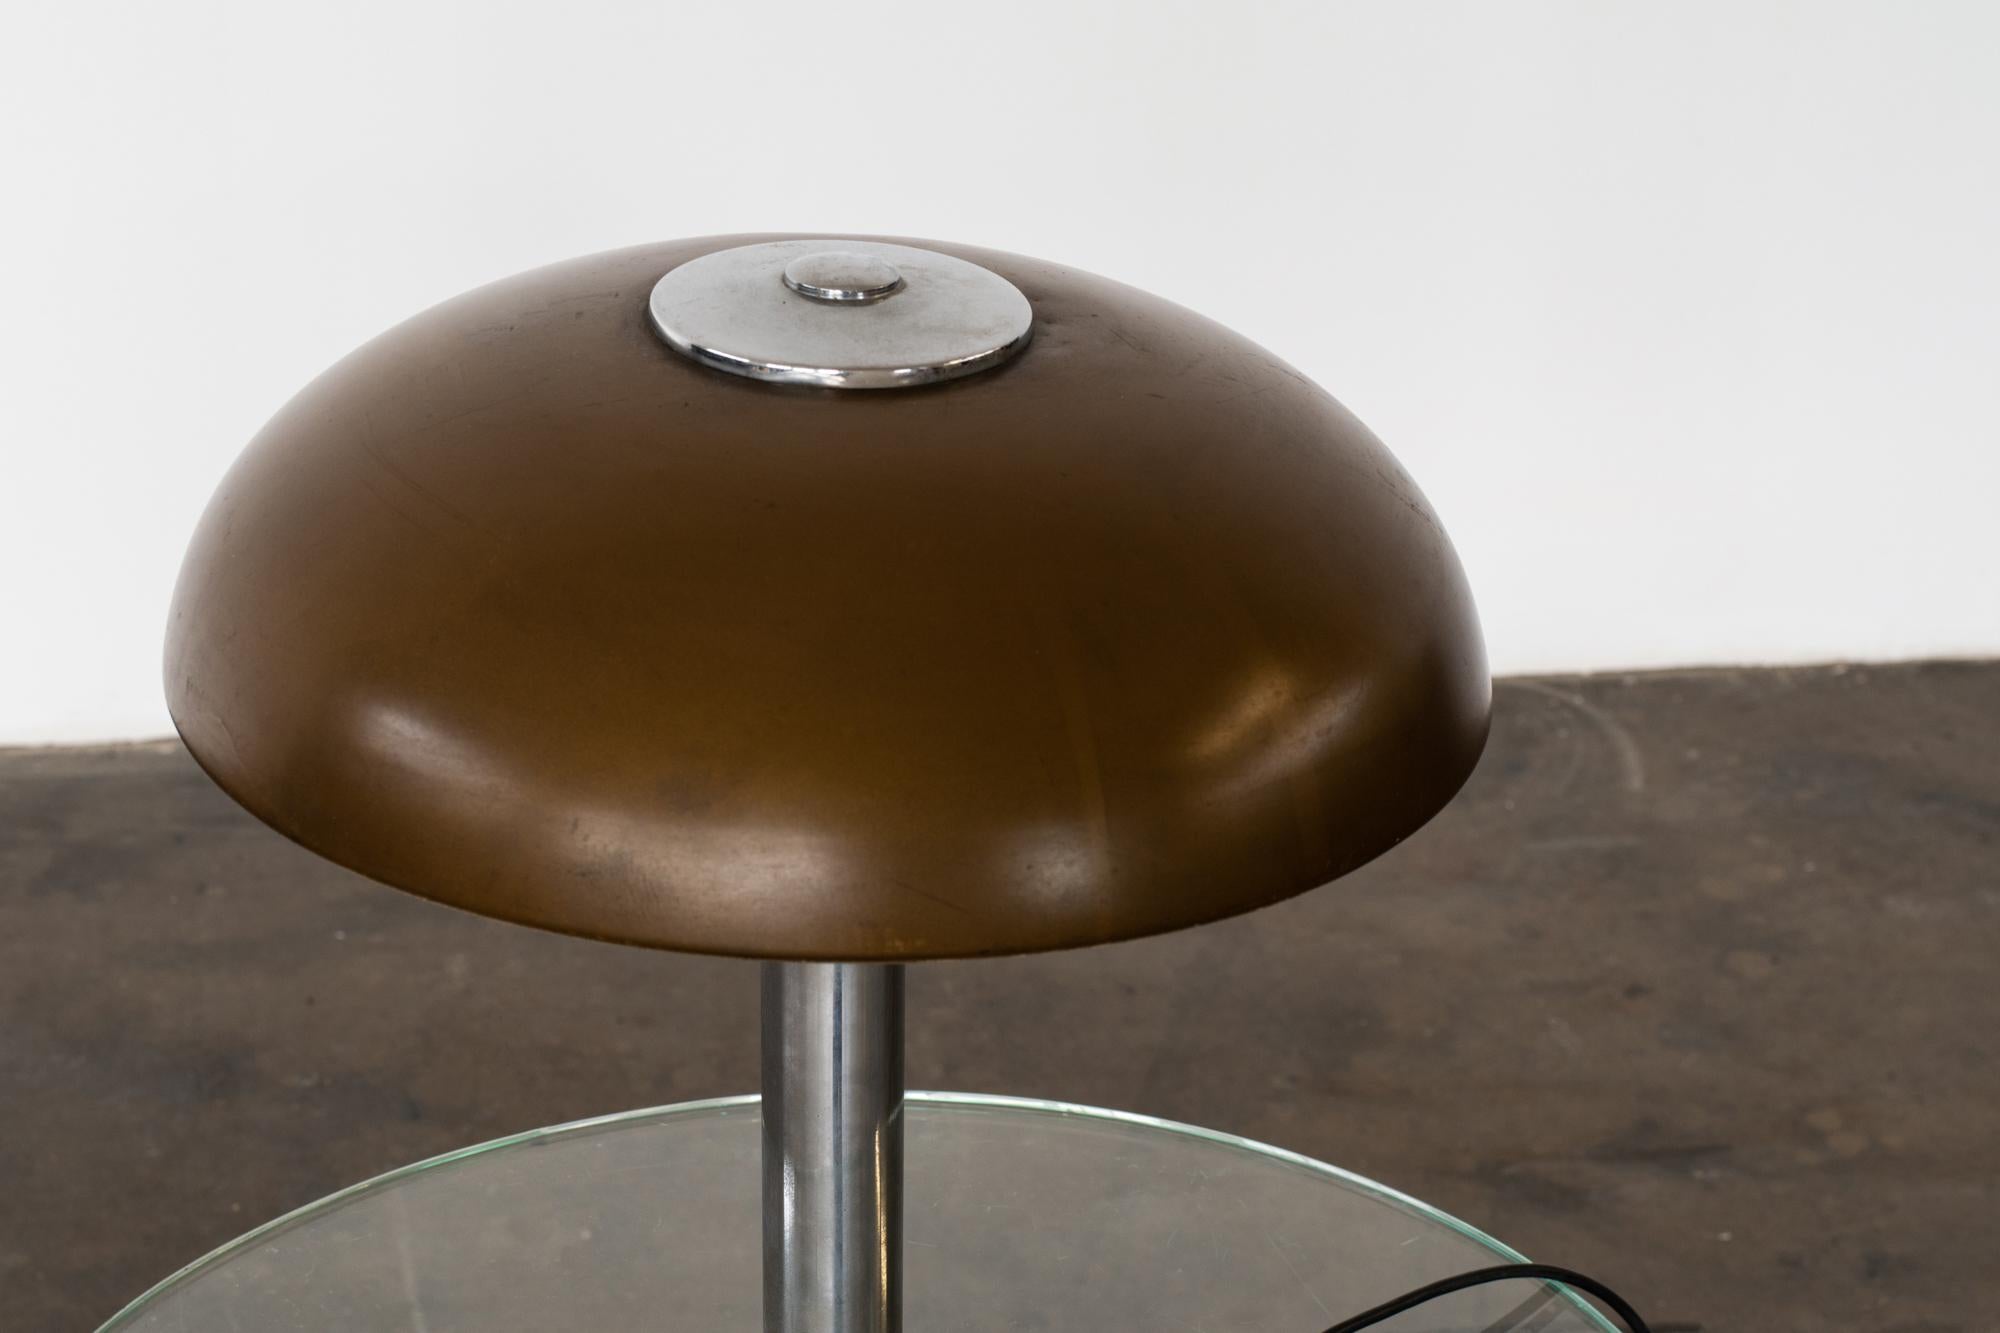 Italian Gio Ponti Aluminium Table Lamp by Pollice, Mid-Century Modern, 1940s Italy